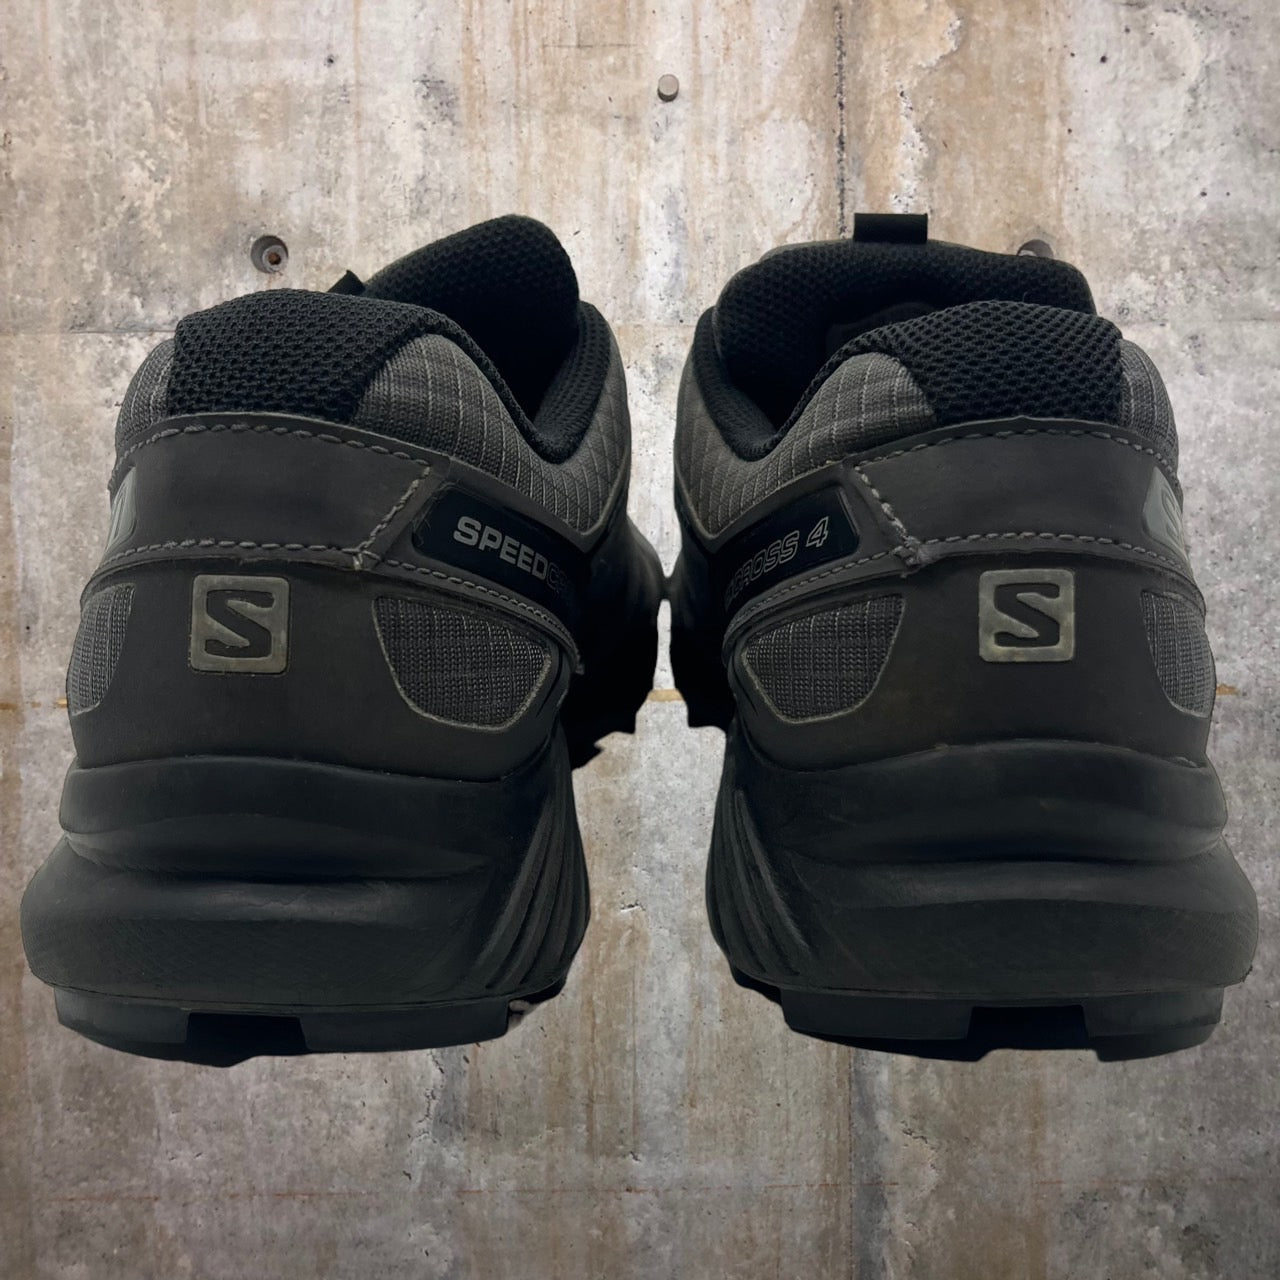 Salomon(サロモン) Speedcross 4 Trail Running Shoes 27.5cm ブラック